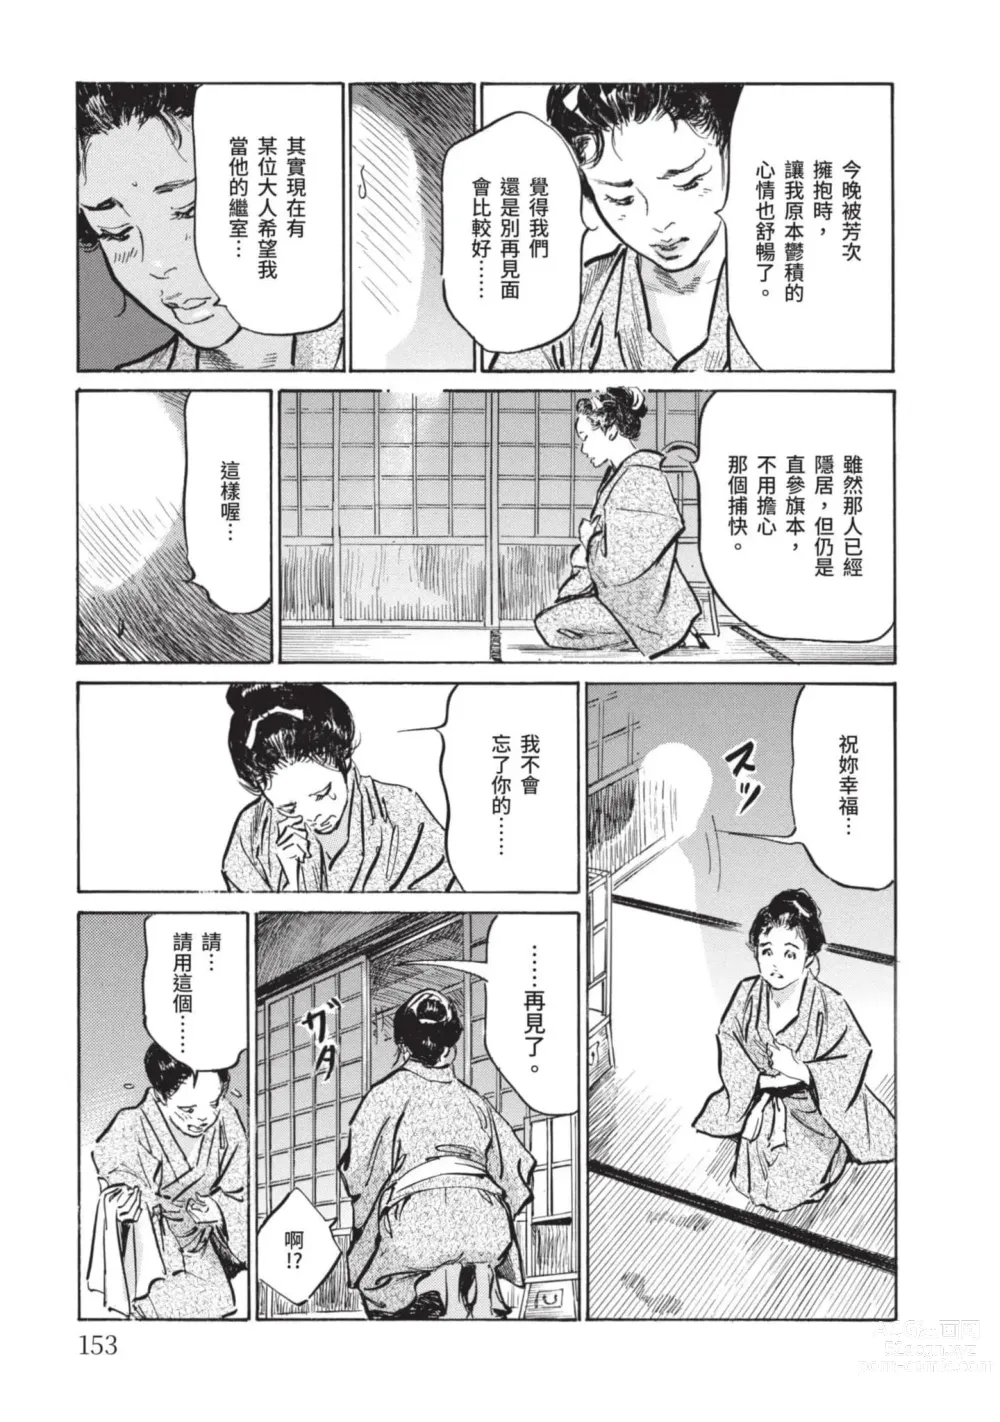 Page 152 of manga Inshuu Hiroku Midare Mandara 2